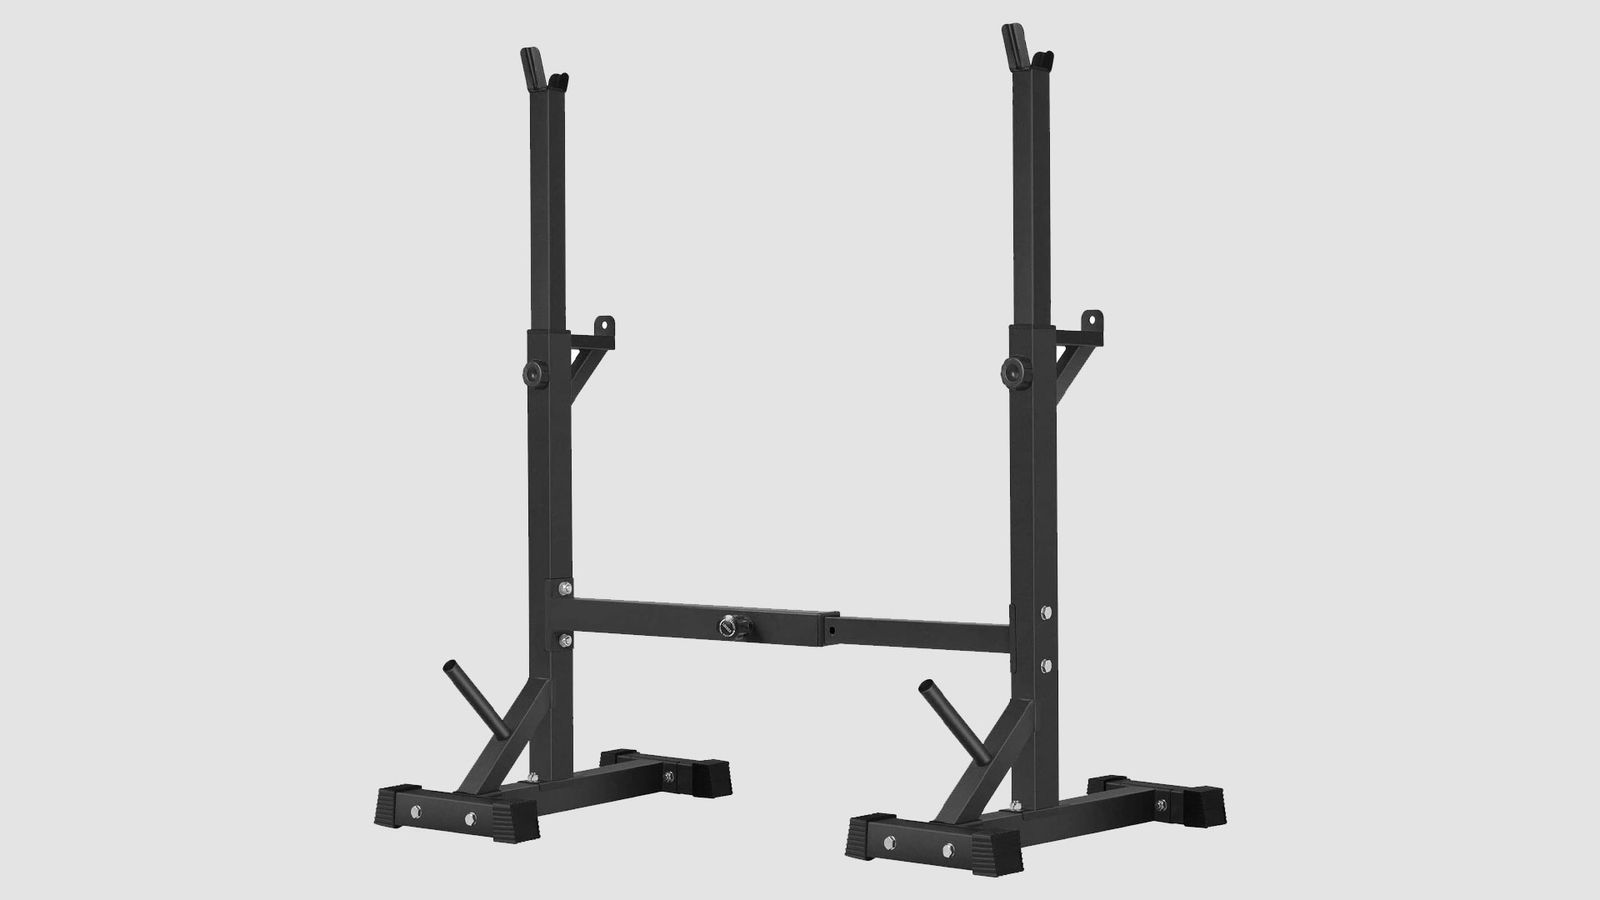 BangTong&Li Squat Rack Stand product image of a black squat rack